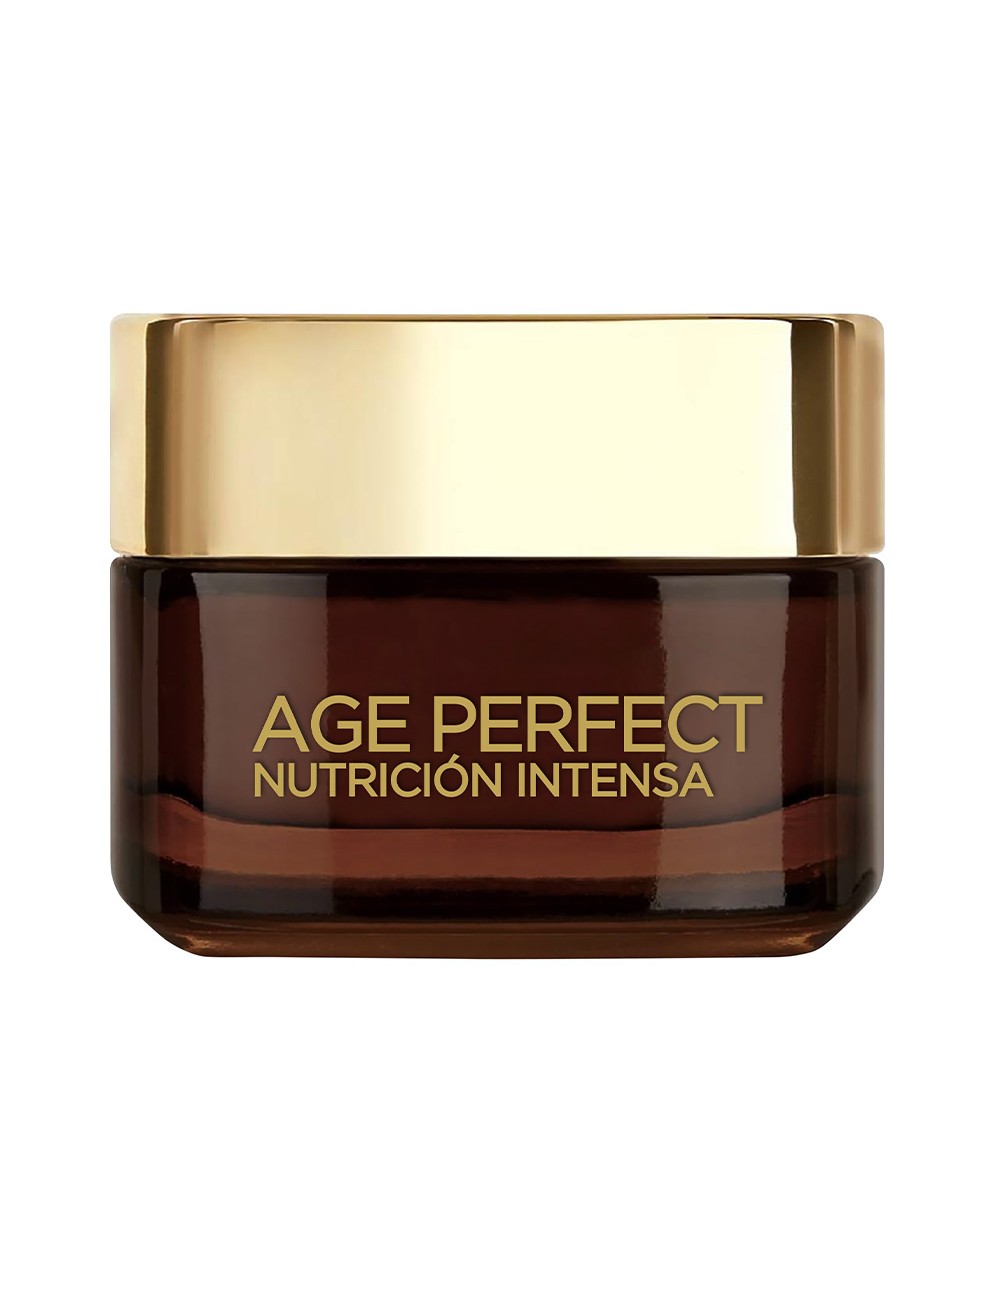 AGE PERFECT nutrition intense crema día 50 ml - NE112336